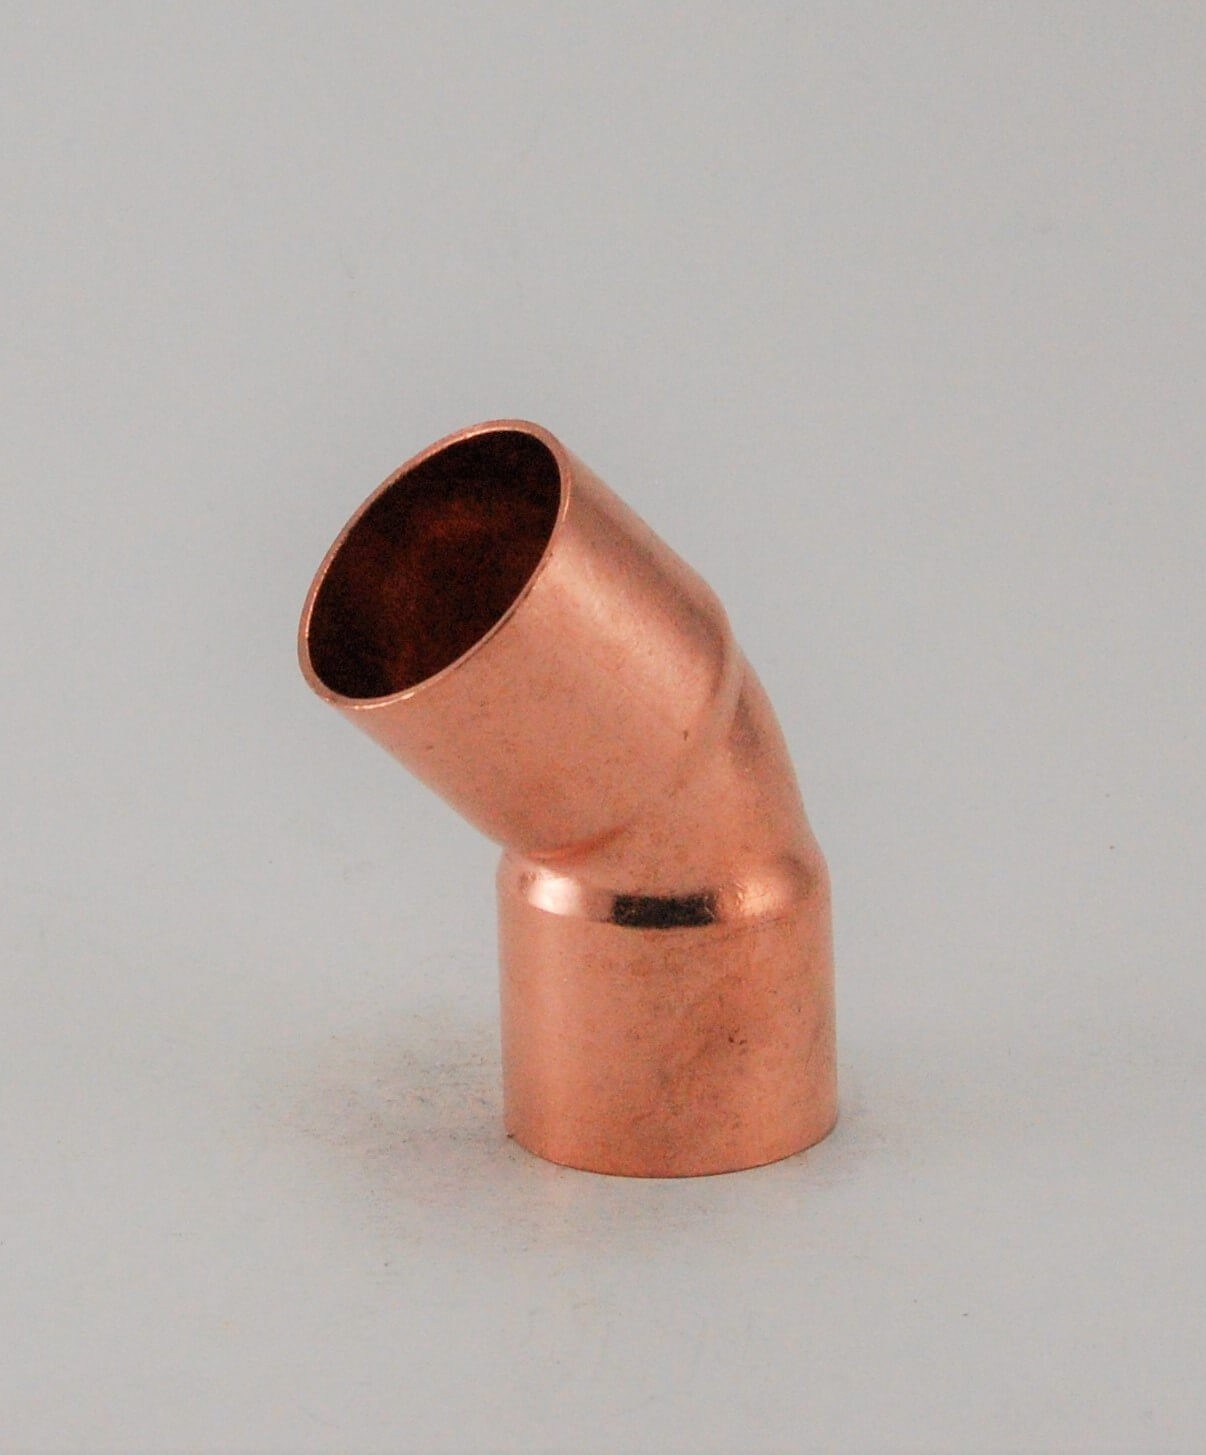 Copper Elbow 45